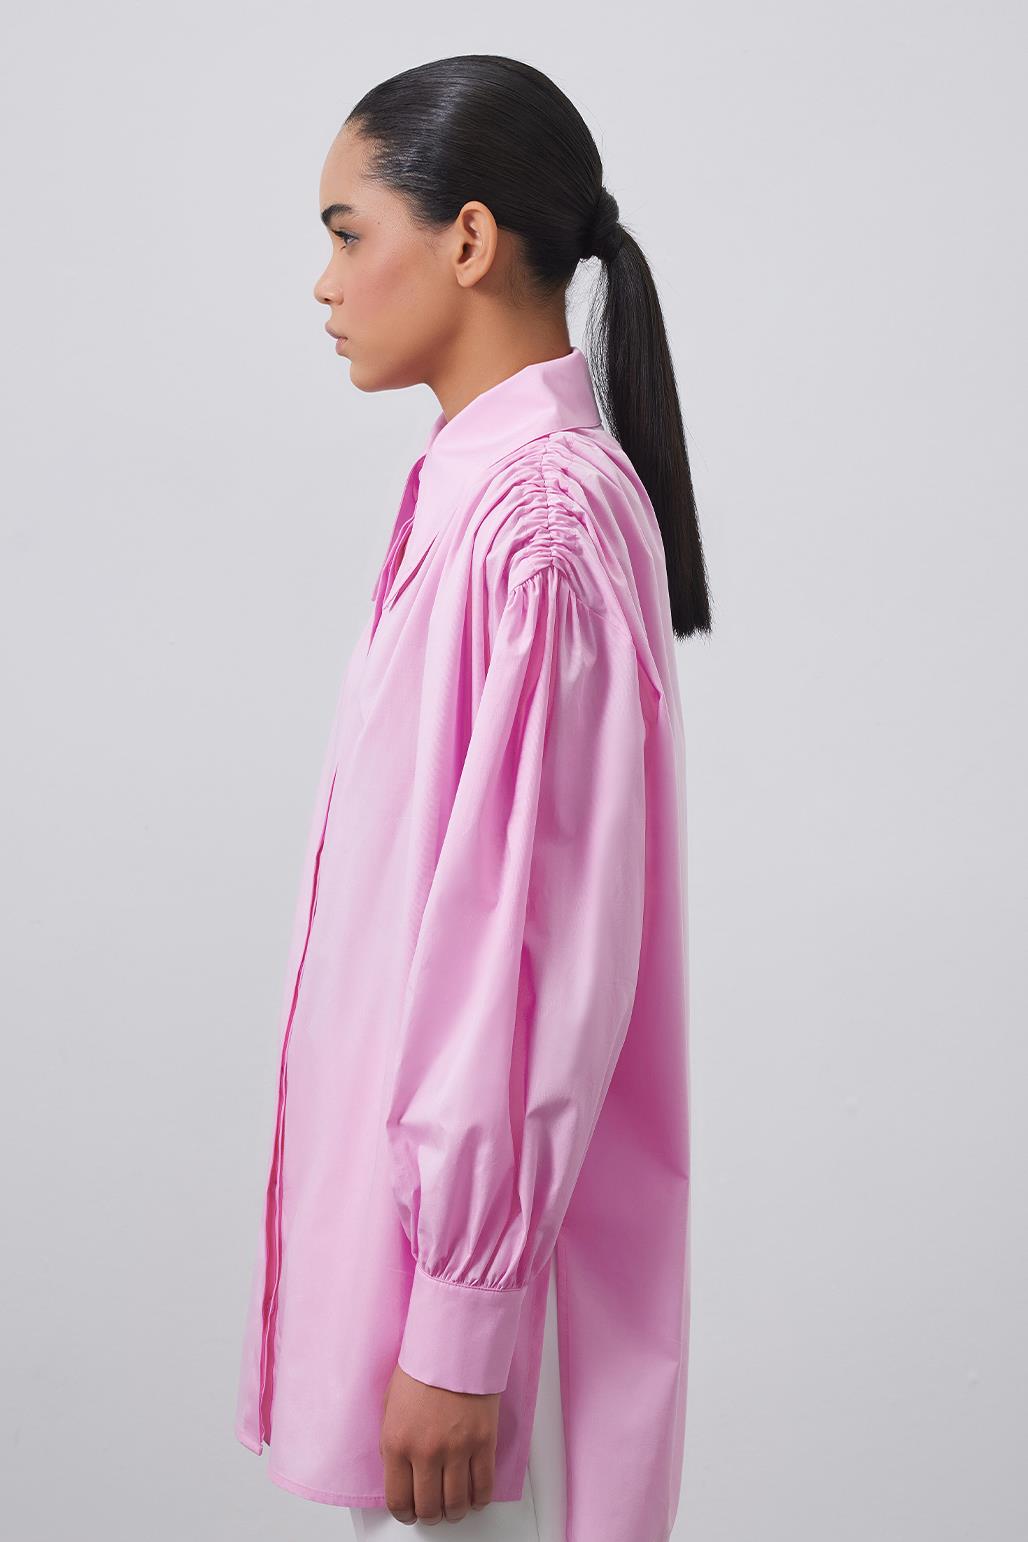 Shoulder Gathered Wide Collar Shirt Pink